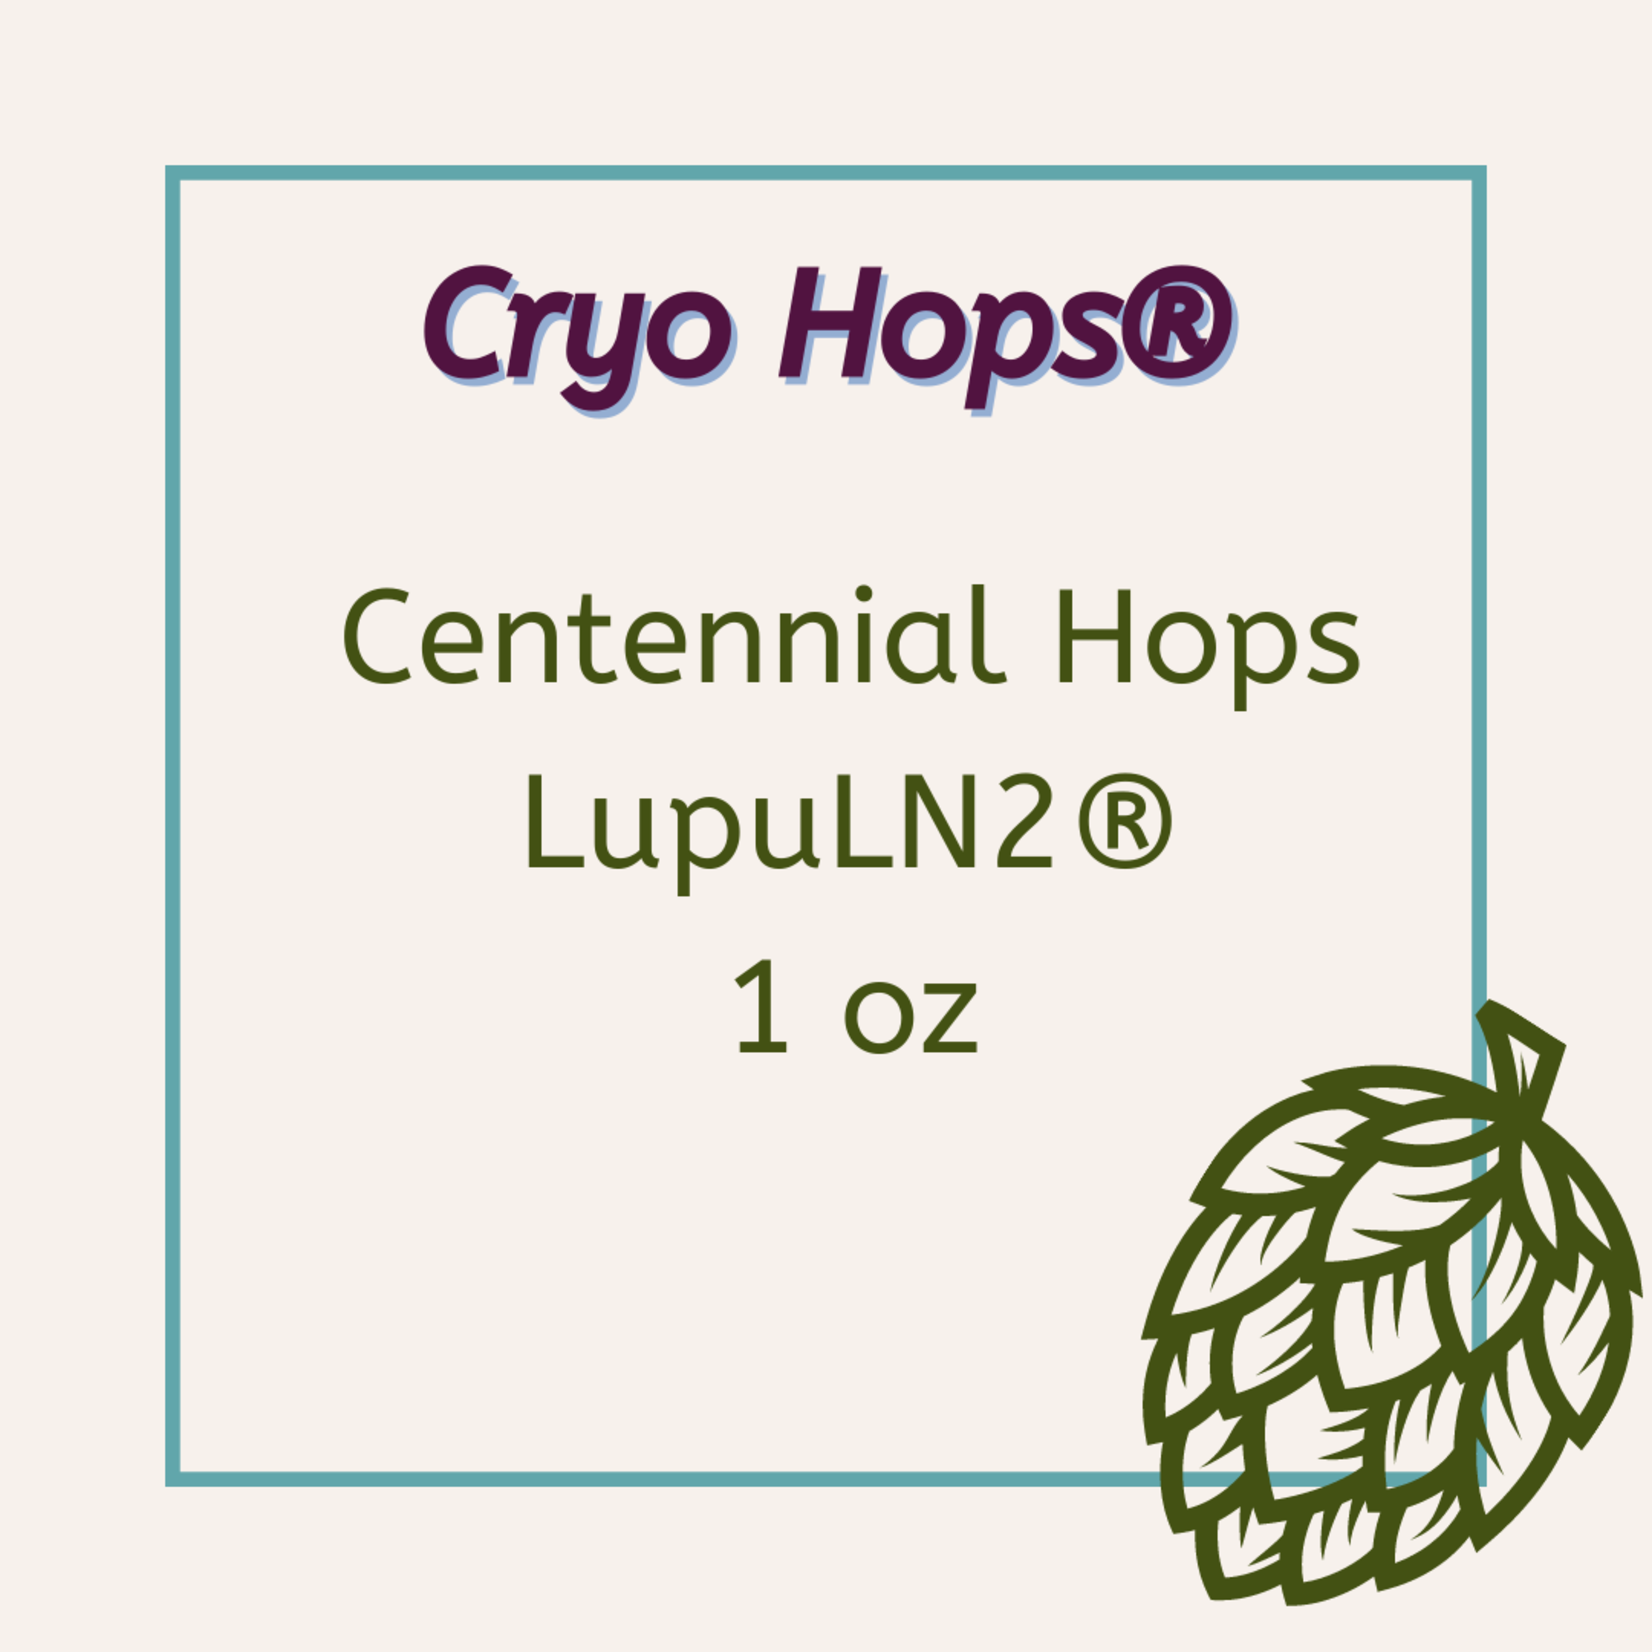 Yakima Chief Cryo Hops® Centennial Hops 1 oz